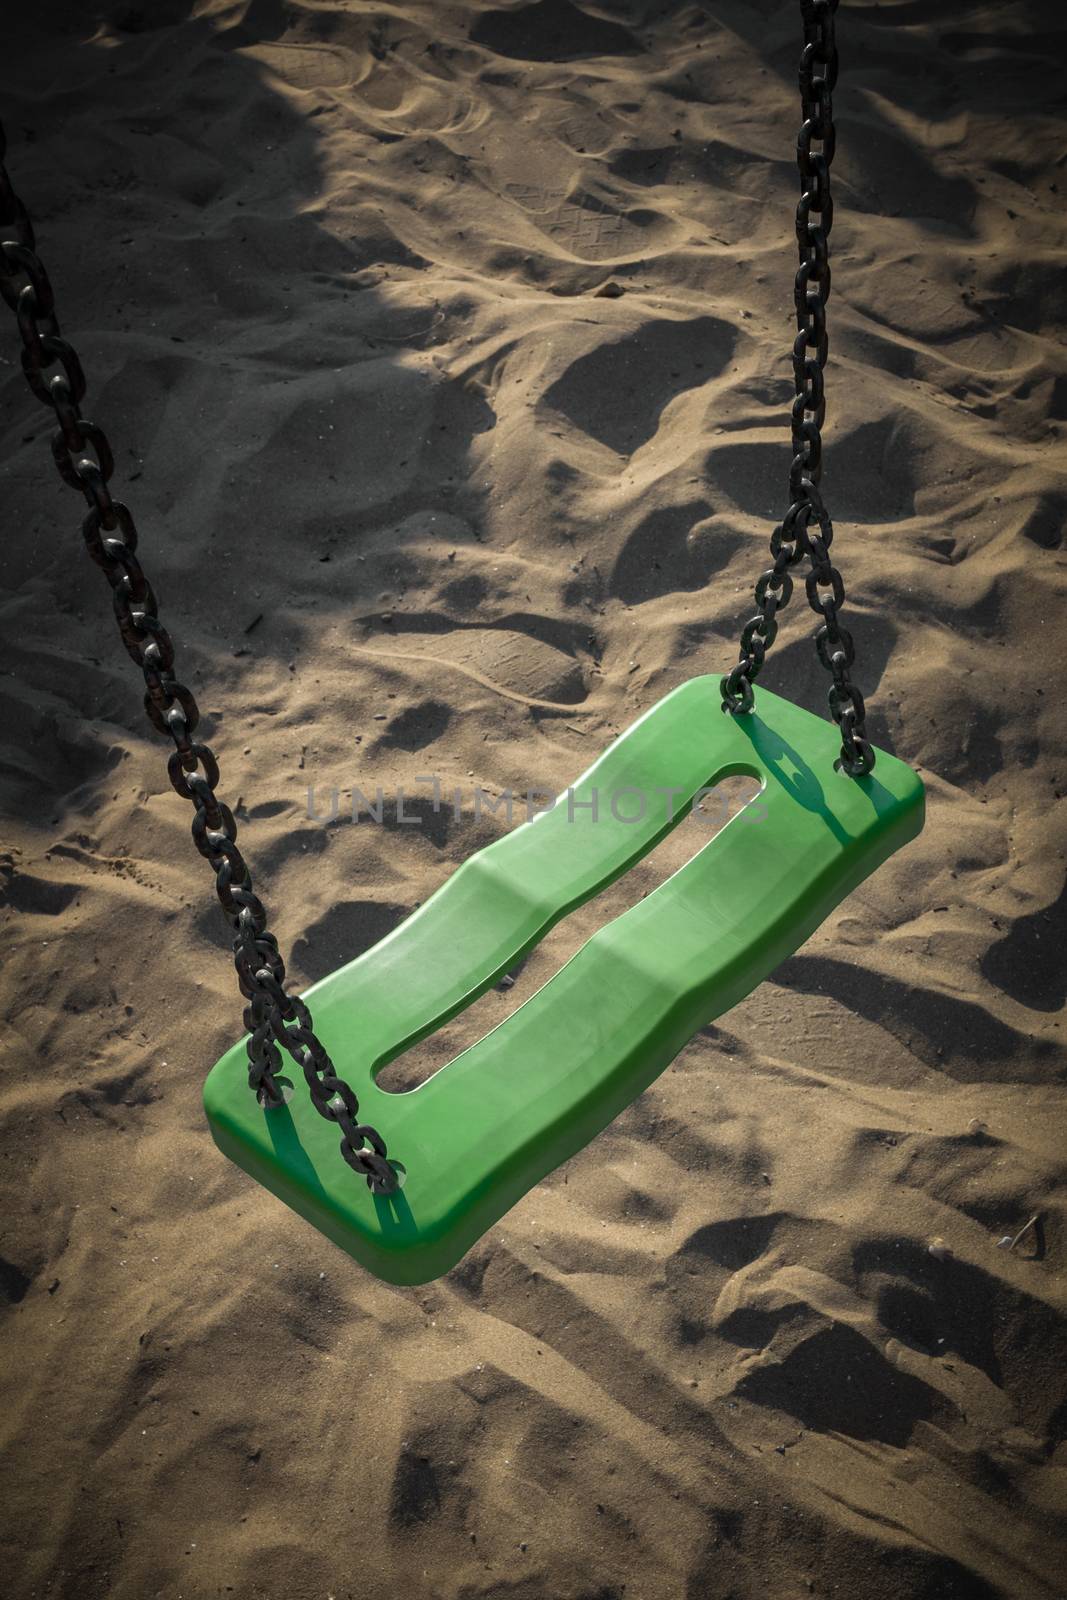 Swing on the beach by germanopoli